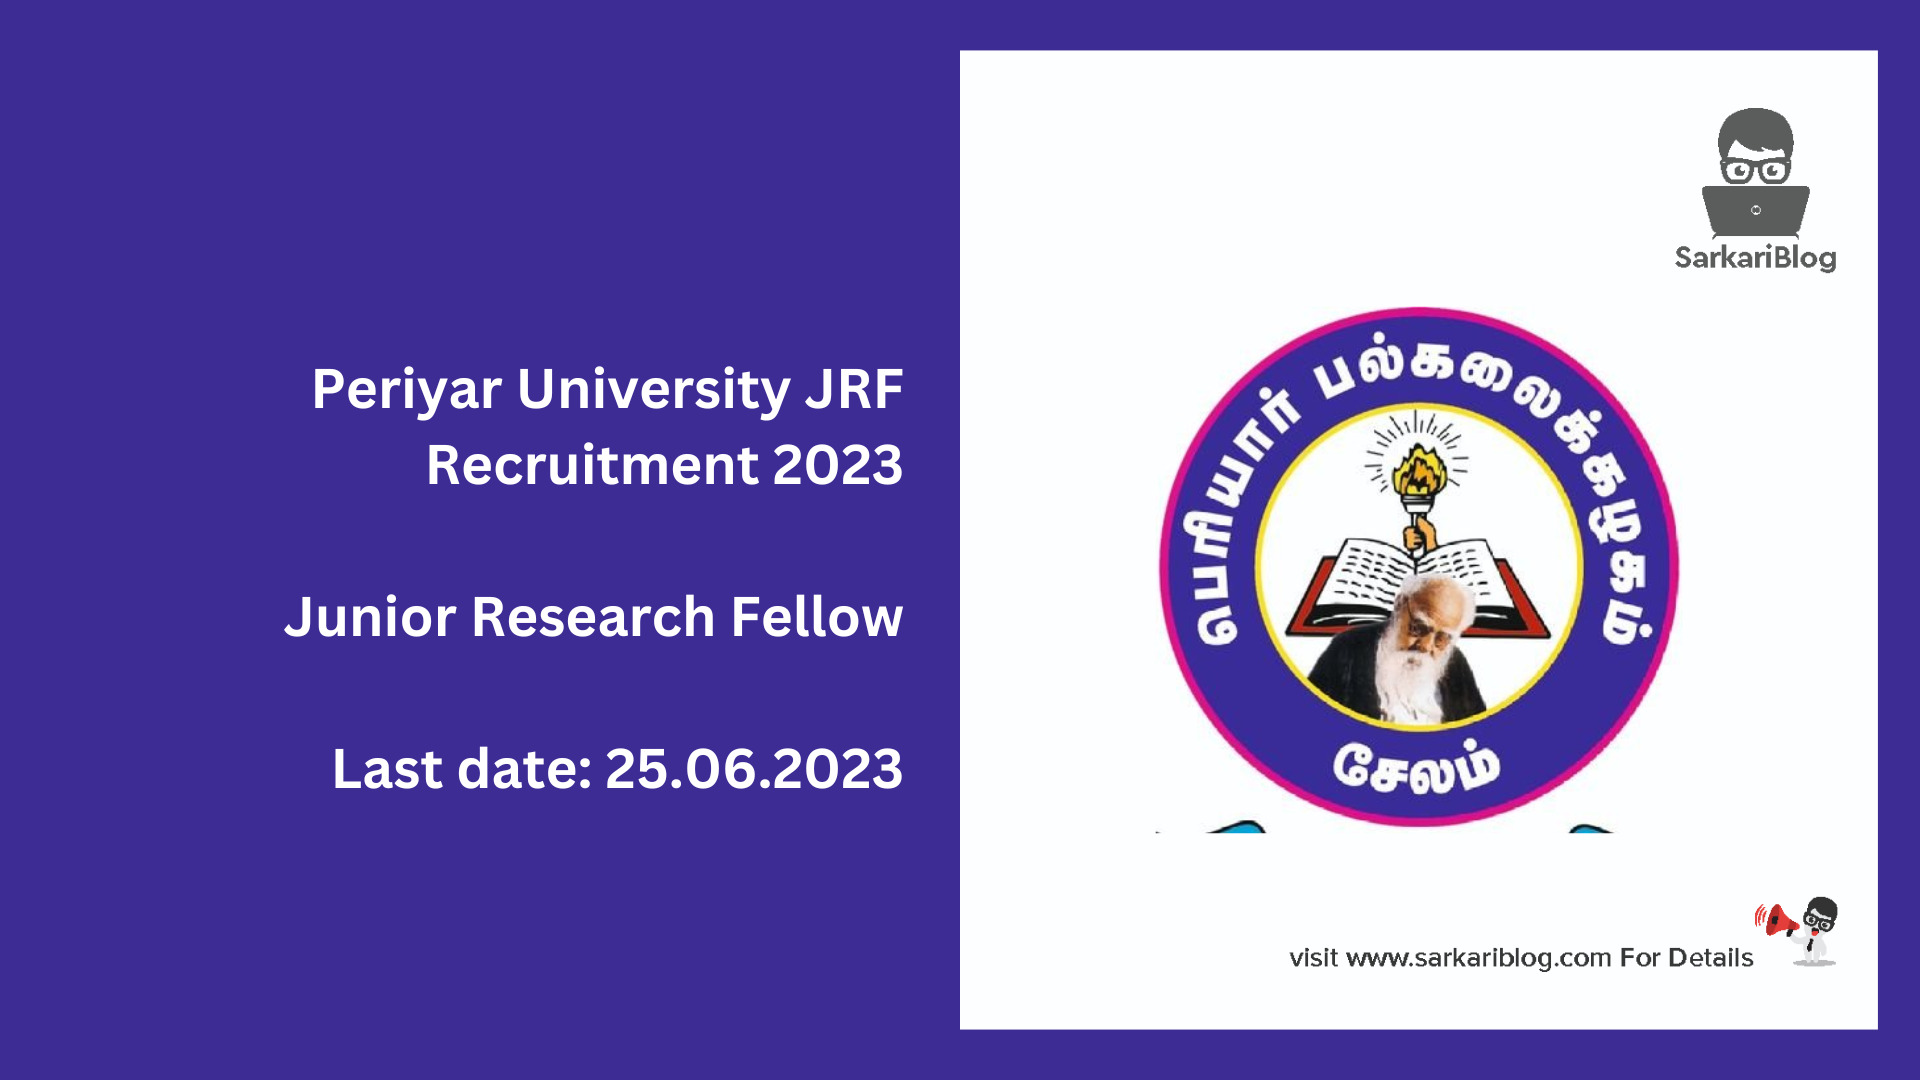 Periyar University JRF Recruitment 2023